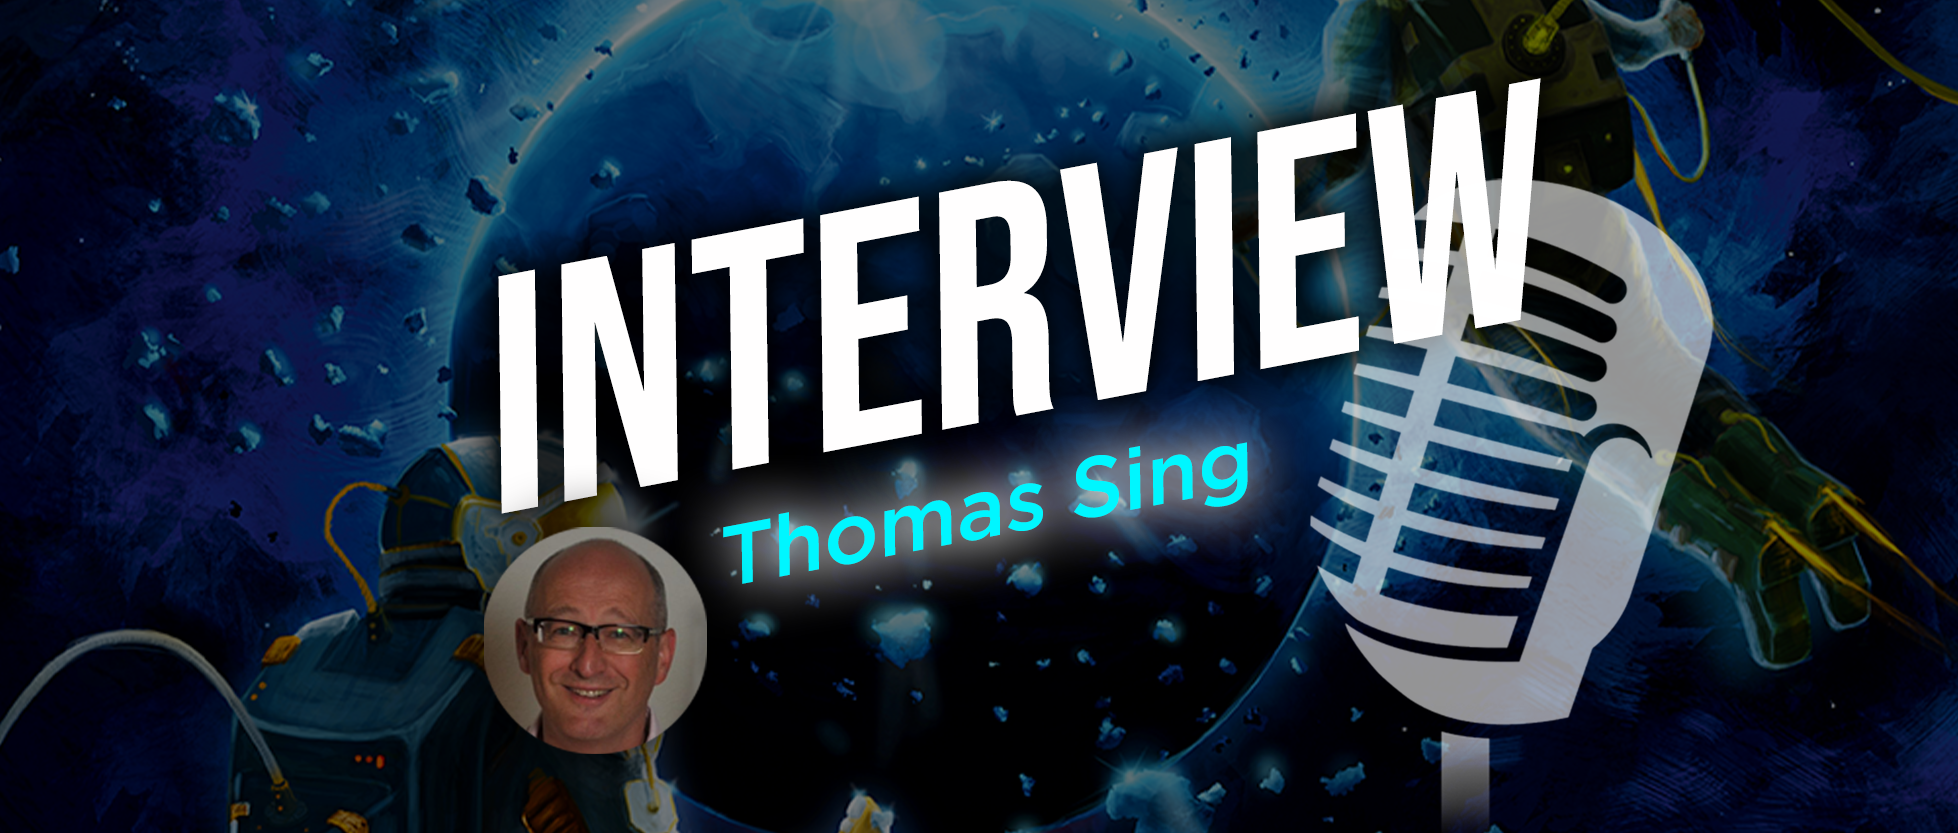 thomas sing interview